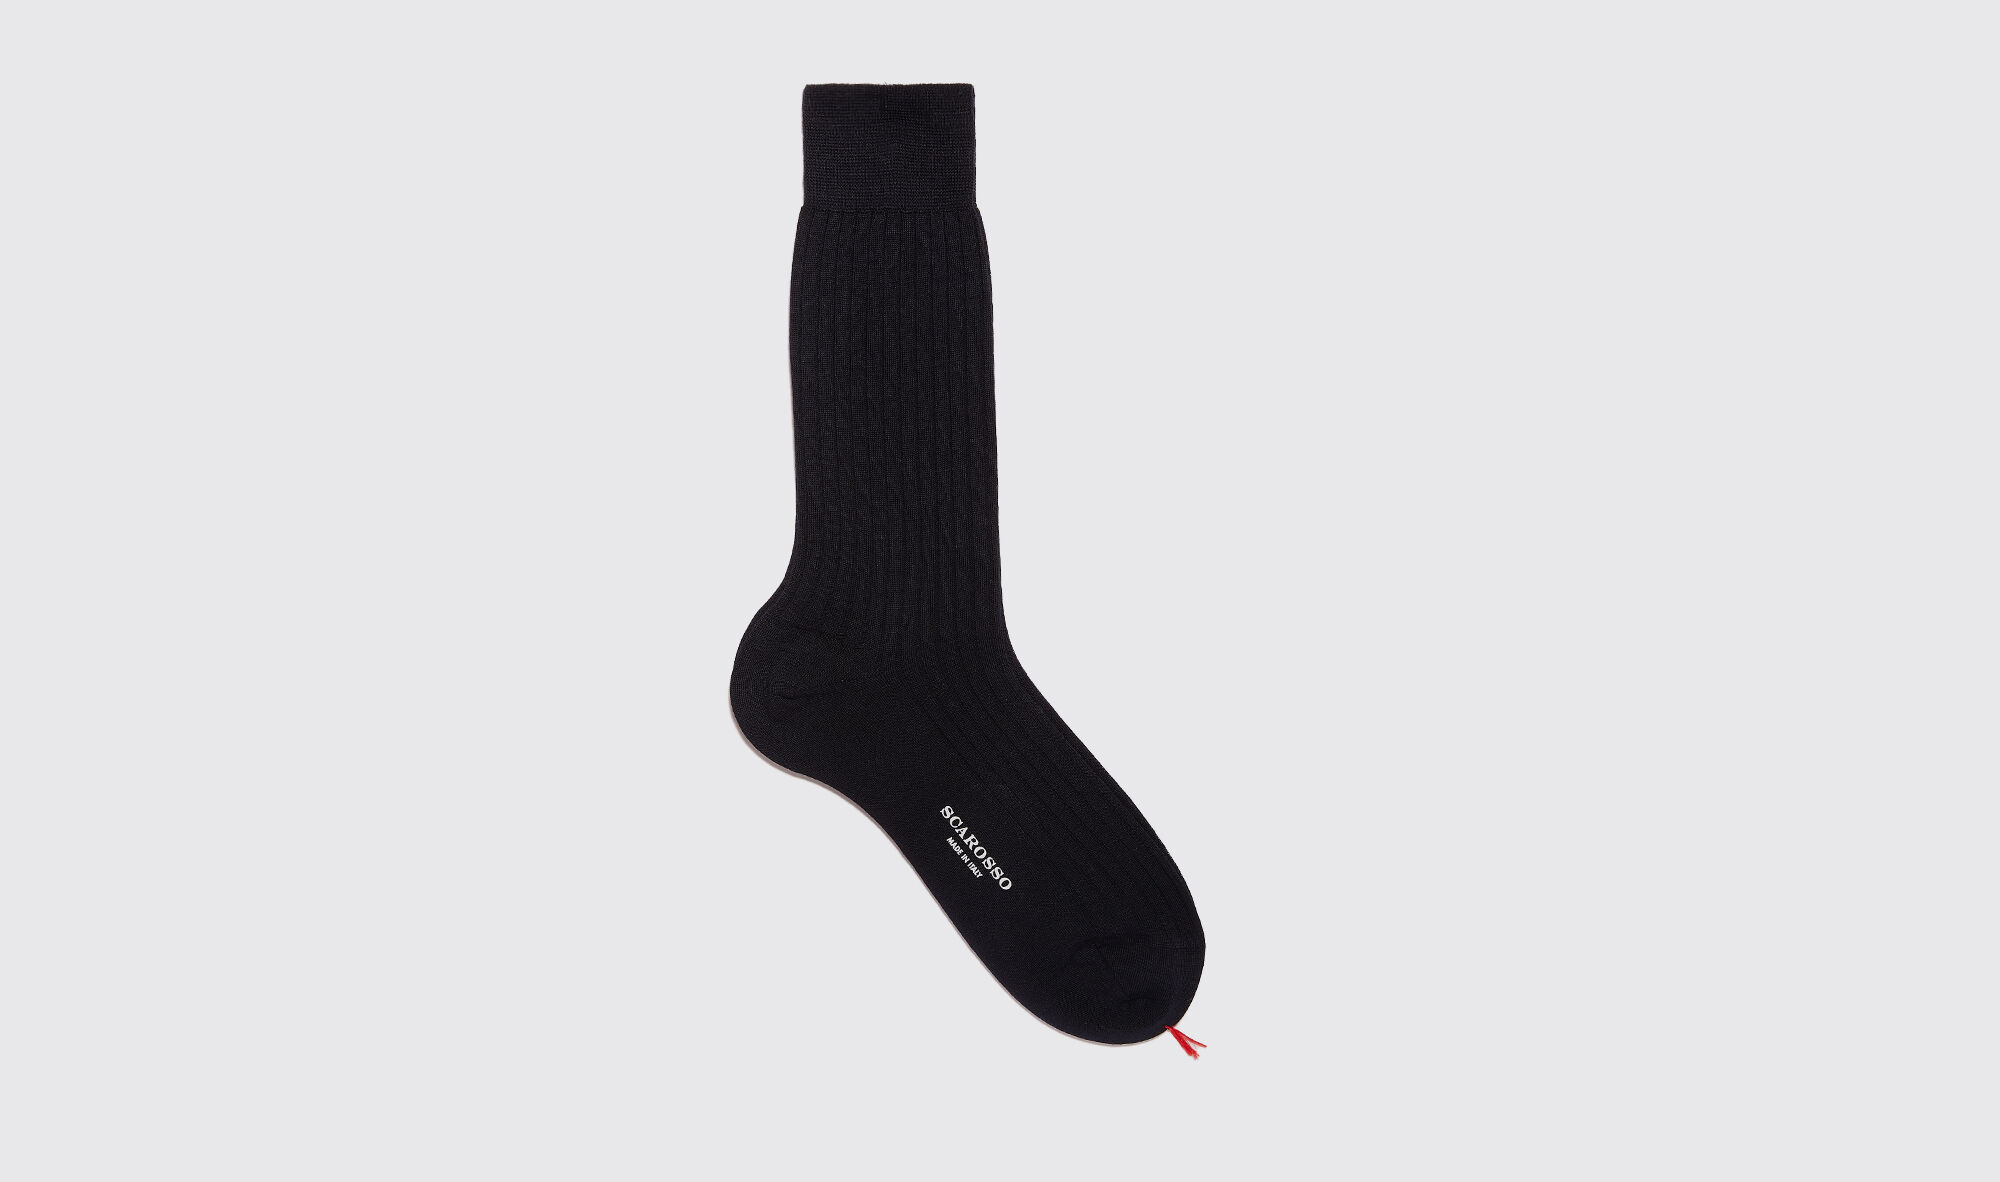 Scarosso Navy Wool Calf Socks - Uomo Calze Blu Navy - Lana Merino 46-47